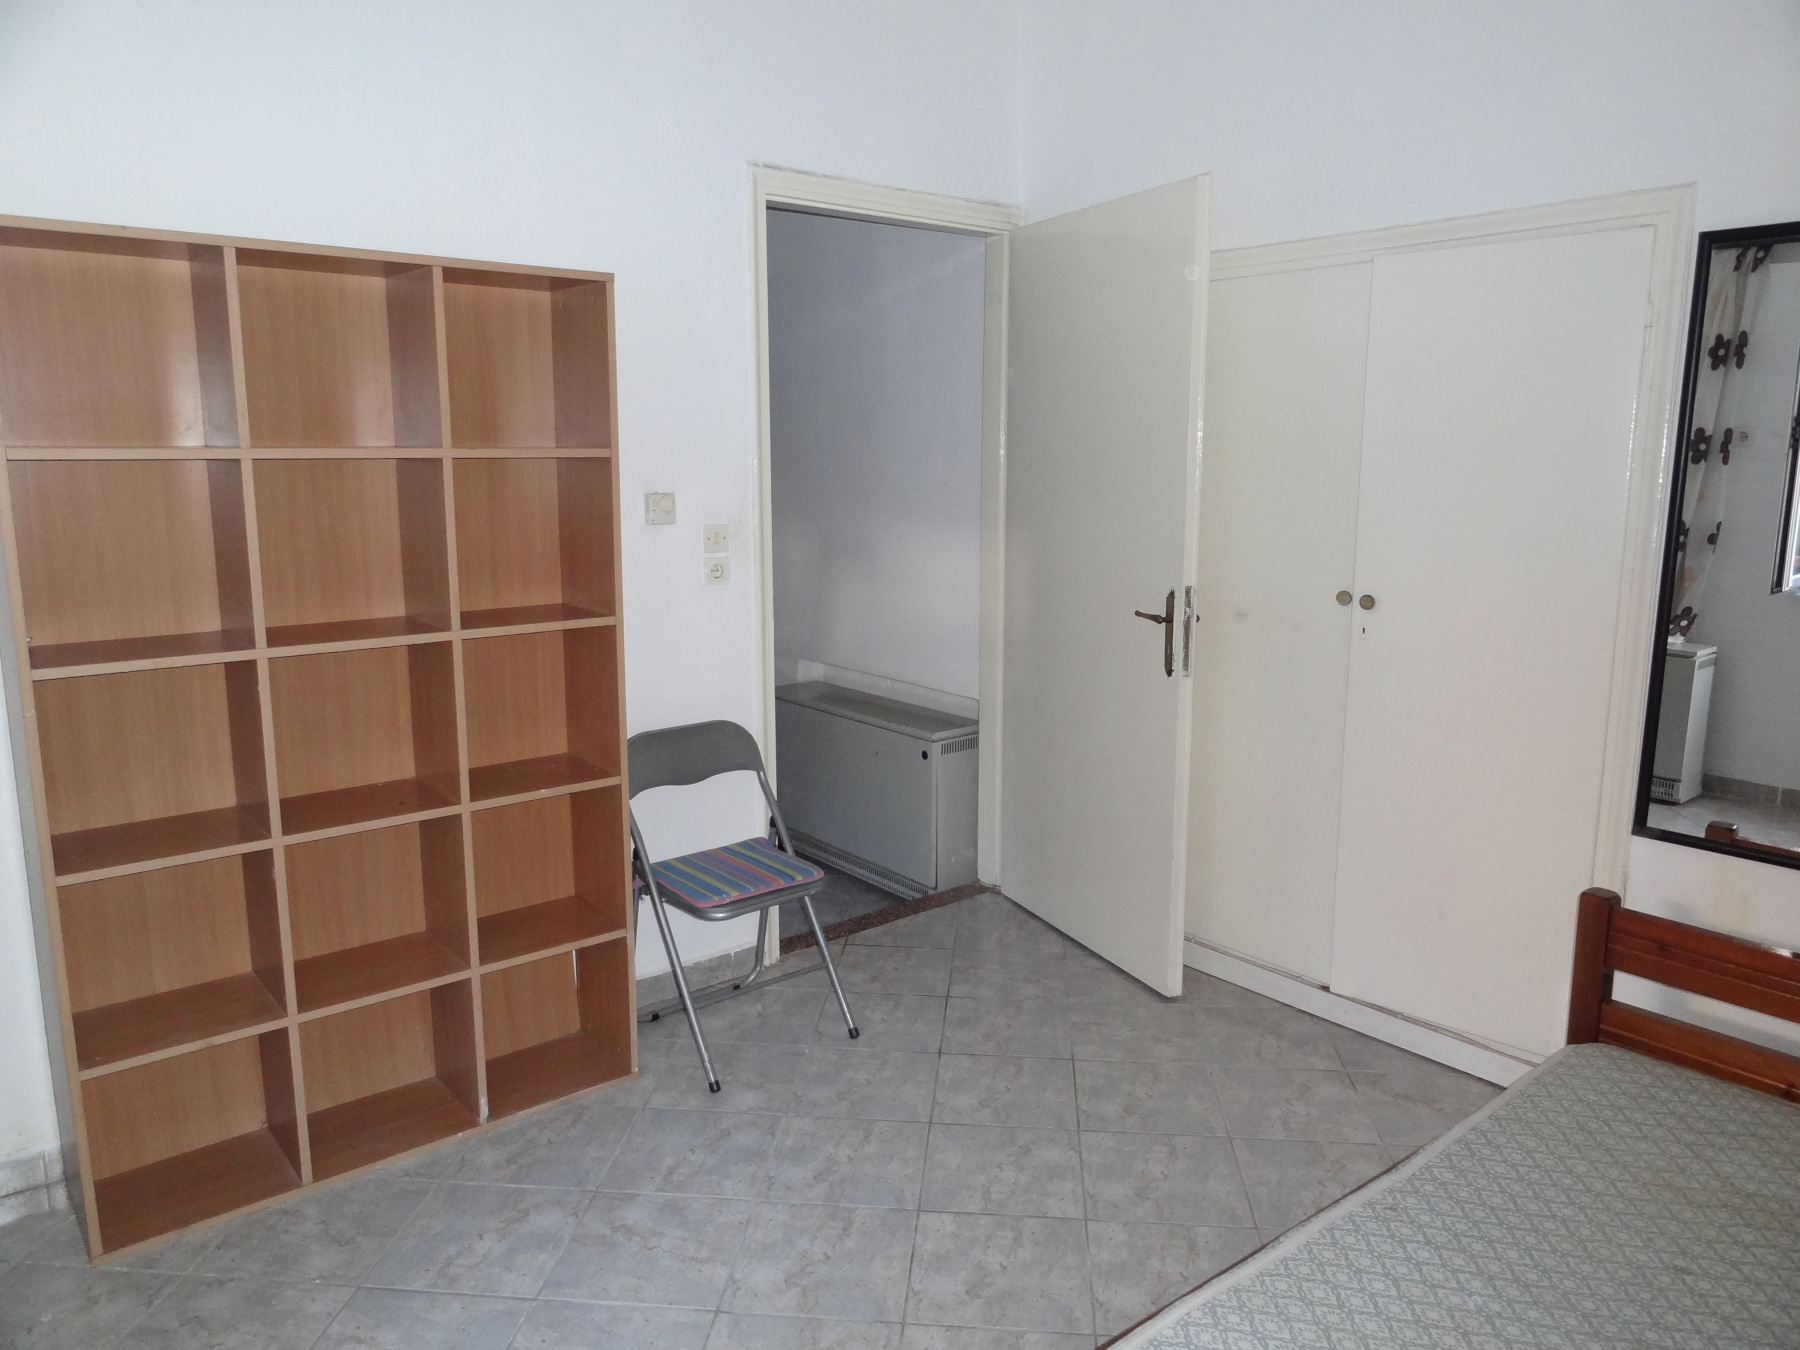 Furnished ground floor studio for rent, 40 sq.m. in Karavatia in Ioannina